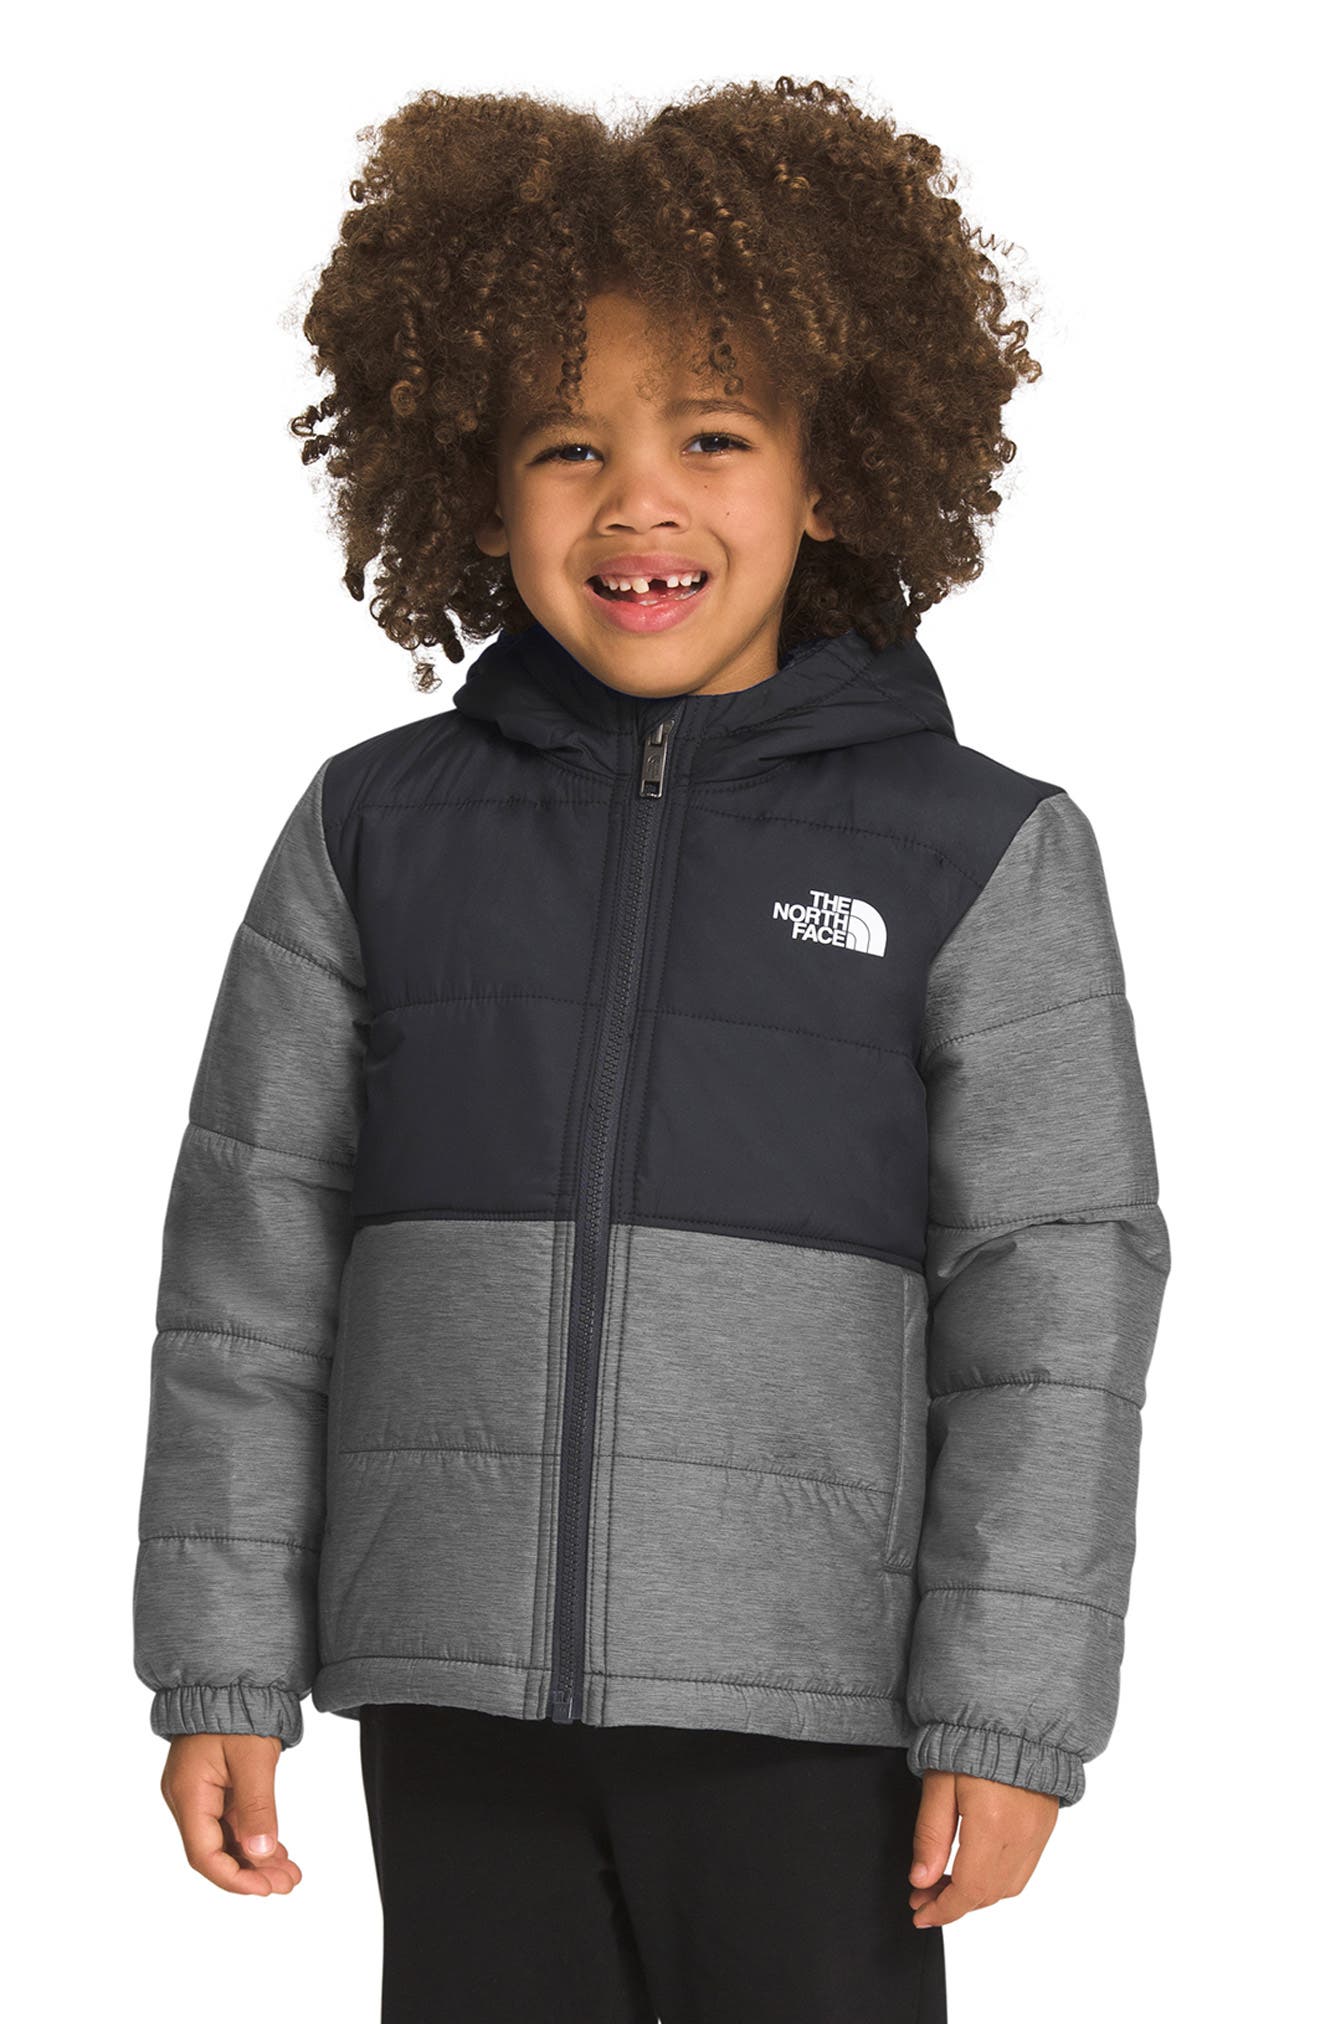 UP YO EB Little Boys Fleece Vests Jacket Outerwear Sleeveless 